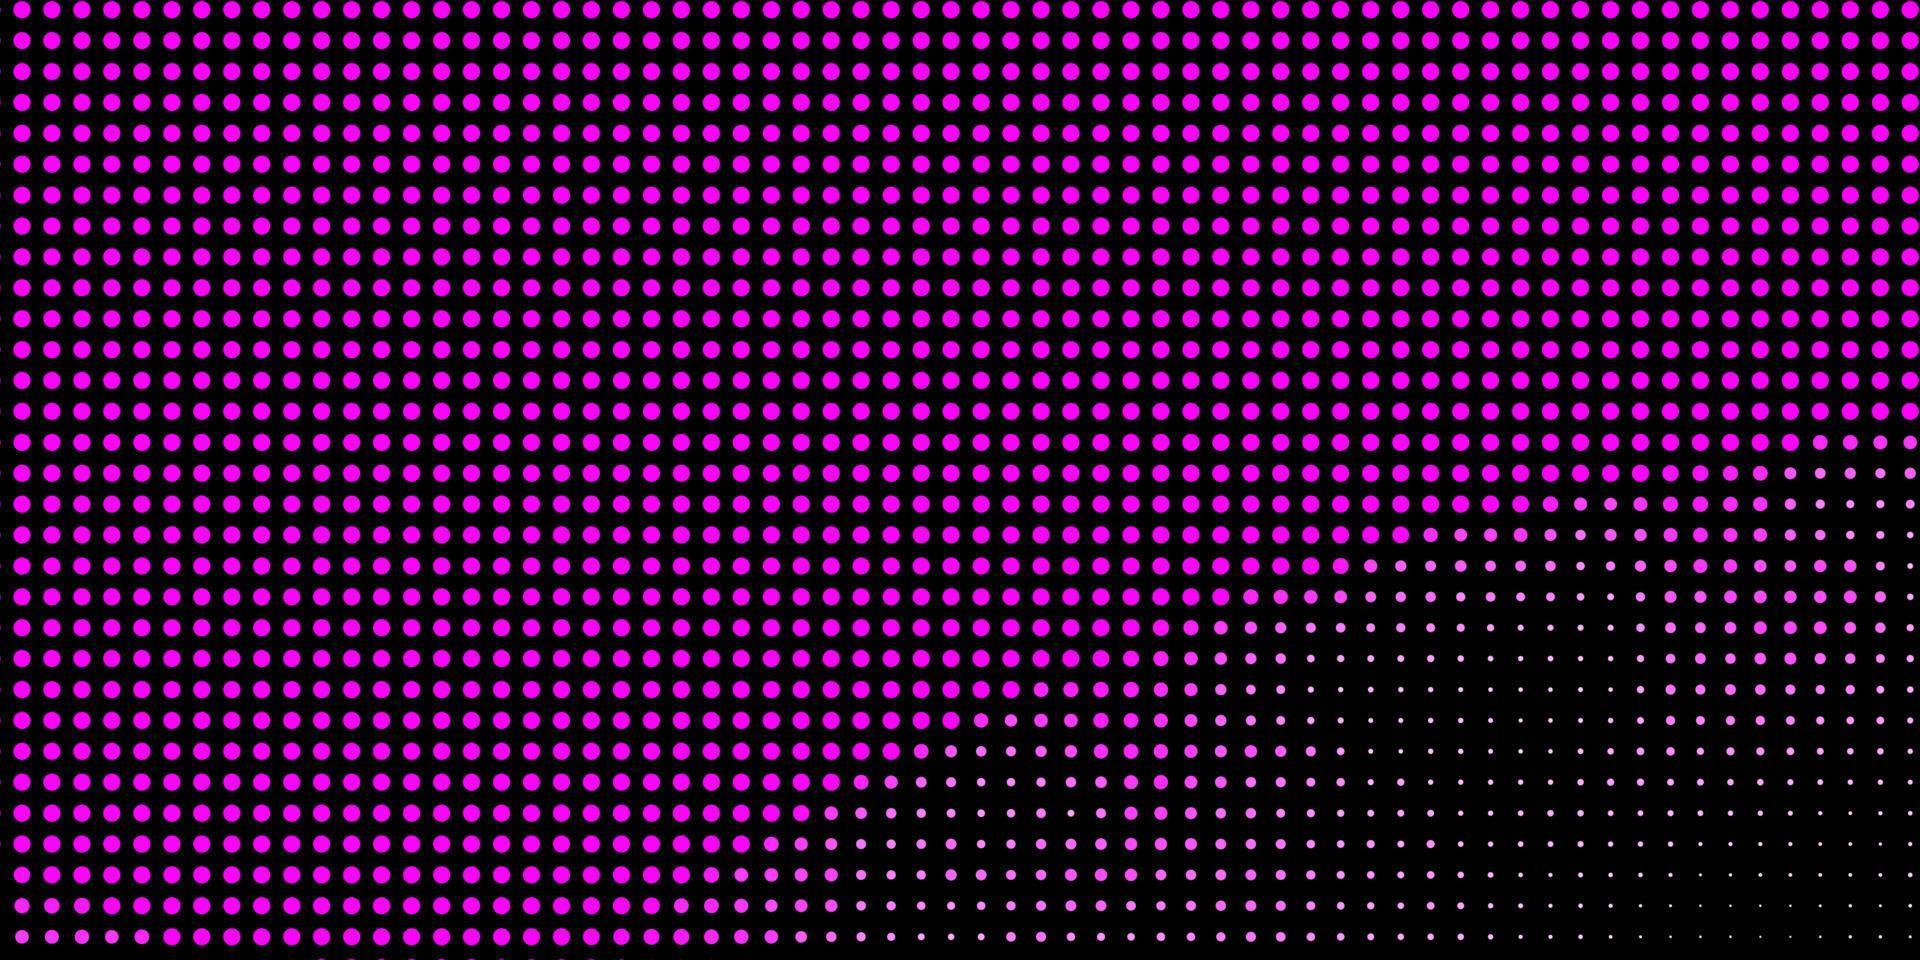 layout de vetor roxo claro, rosa com formas de círculo.